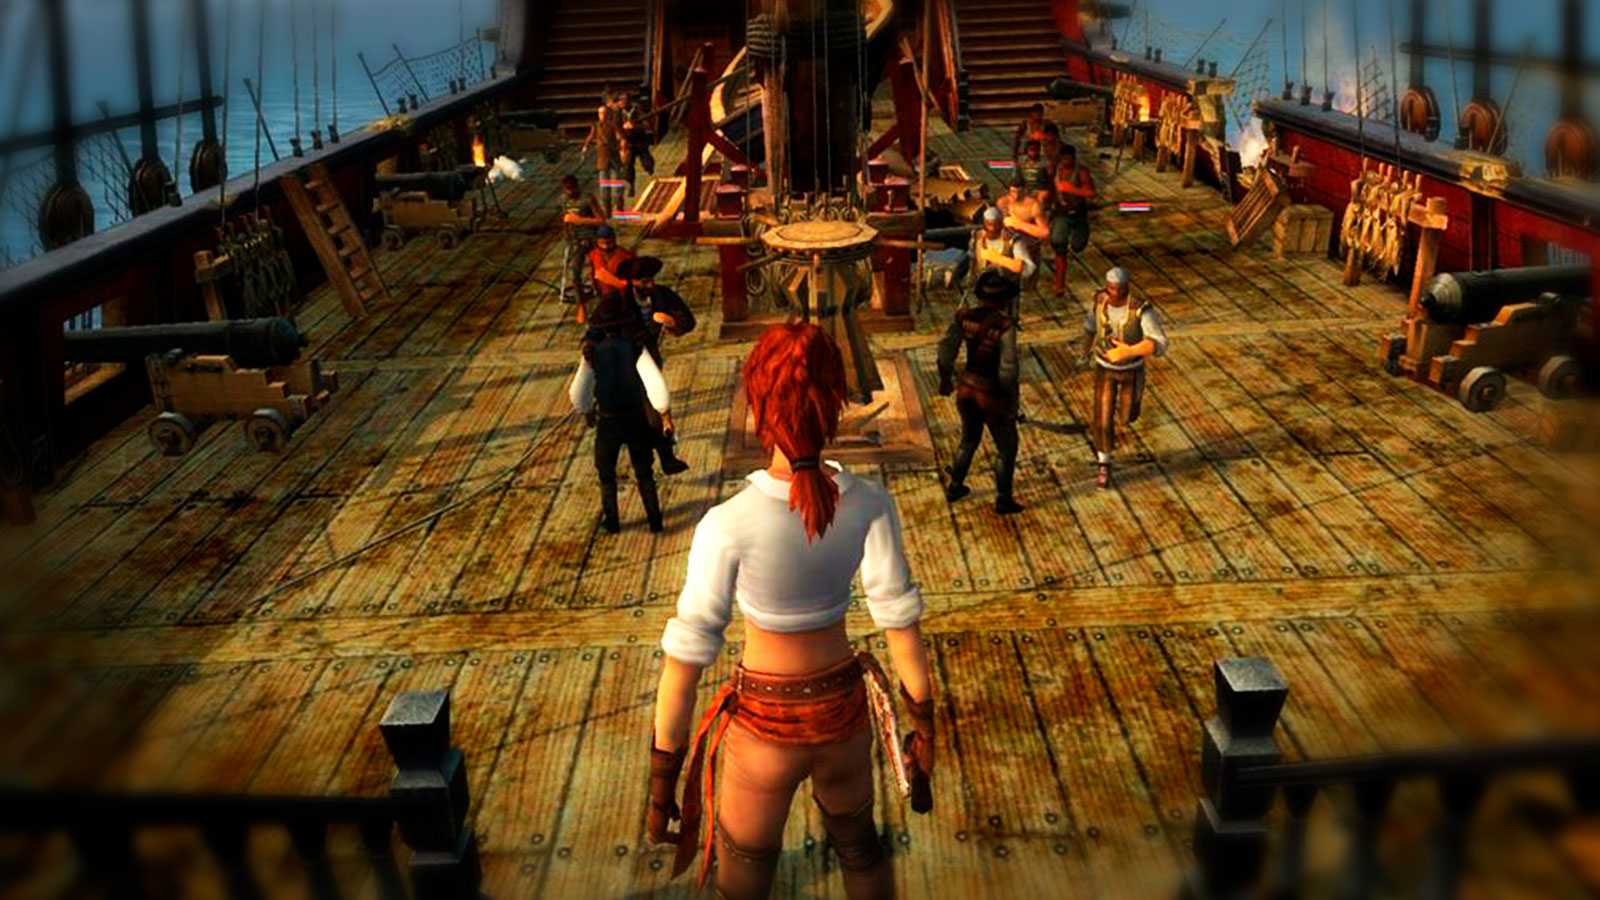 Pirate's treasure - osrs wiki